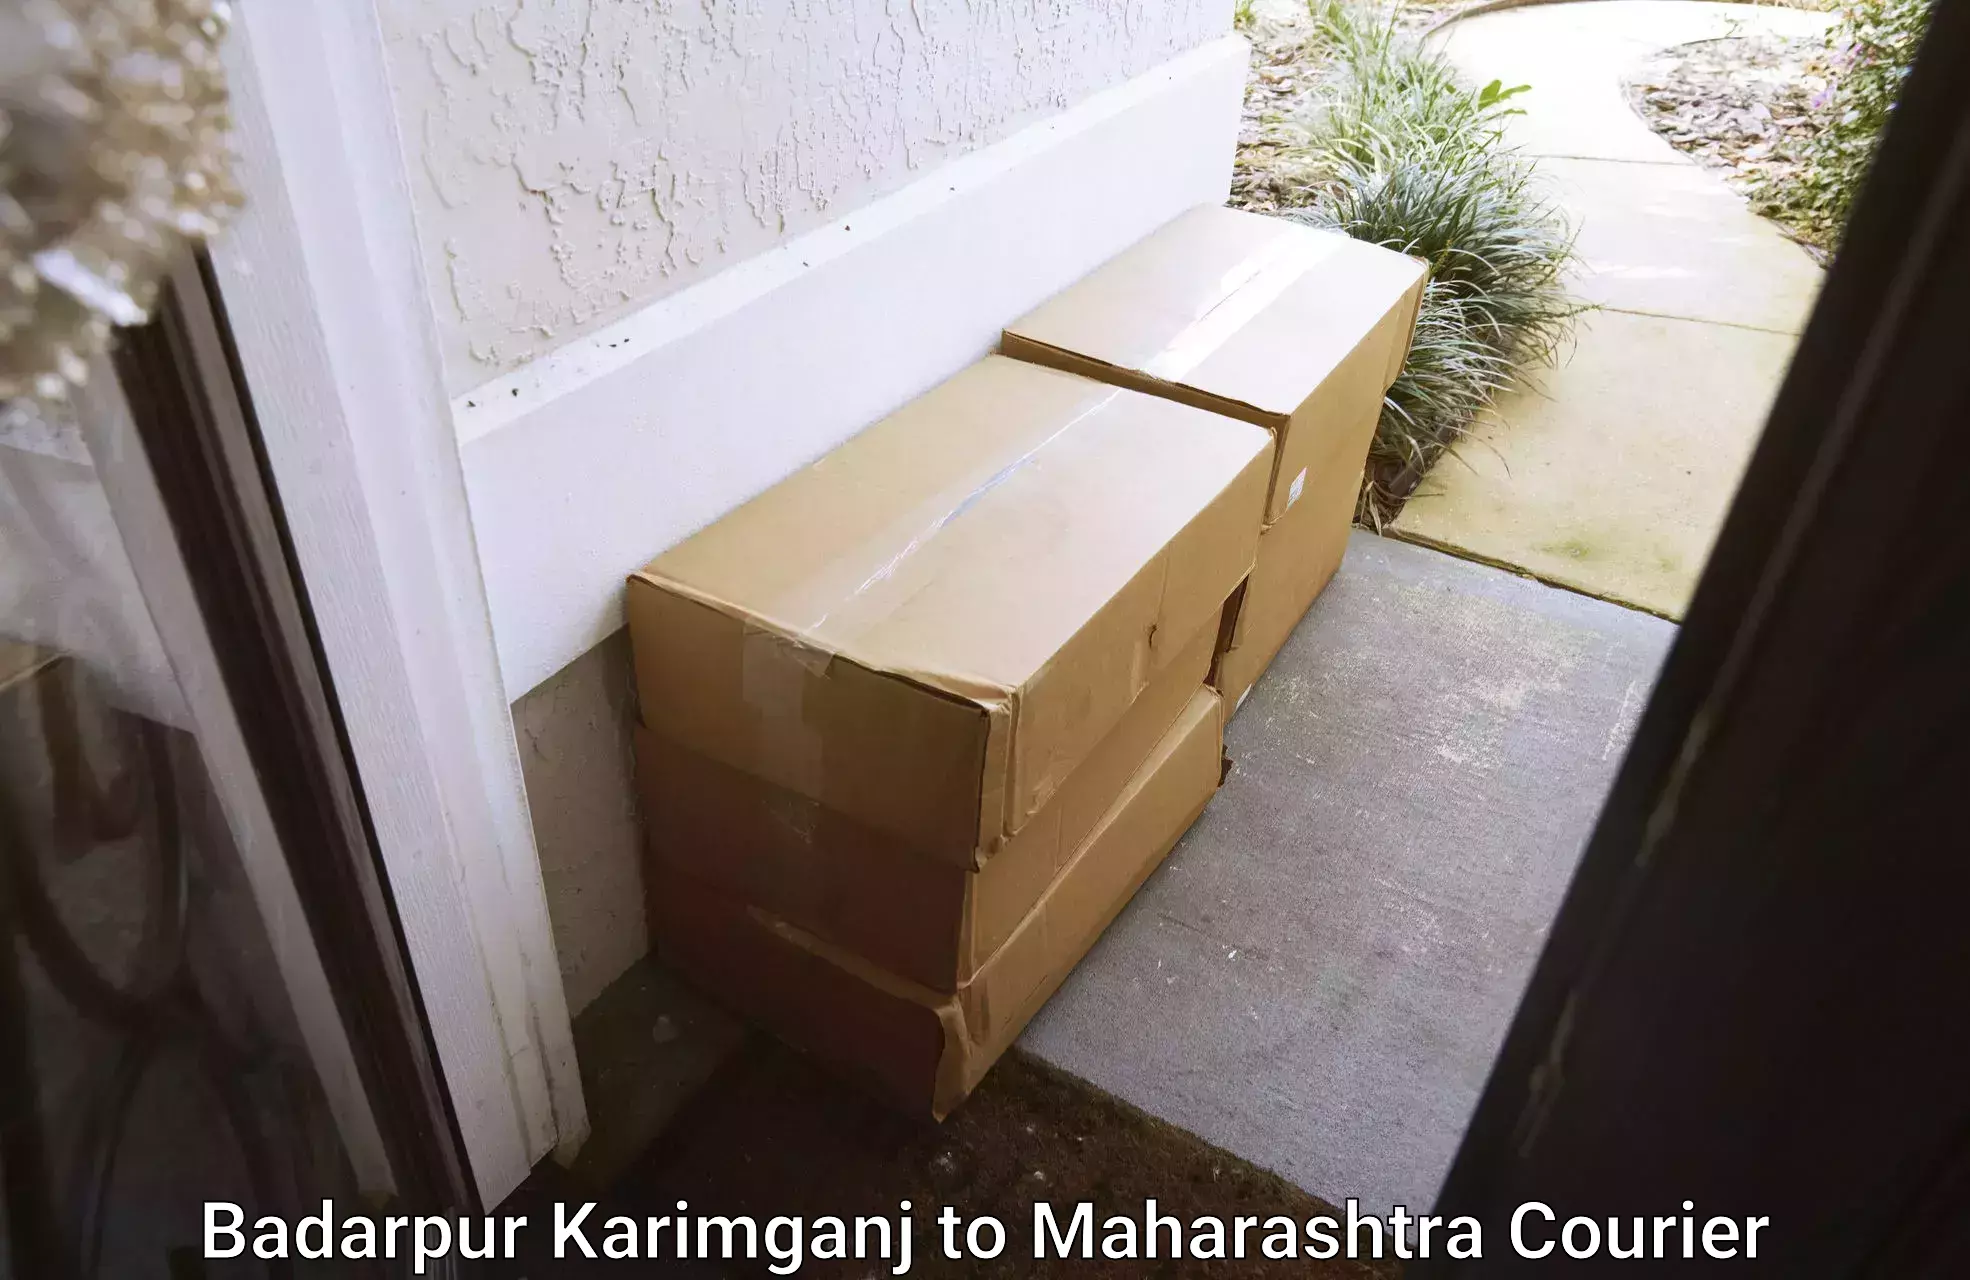 Courier service booking Badarpur Karimganj to Akkalkot